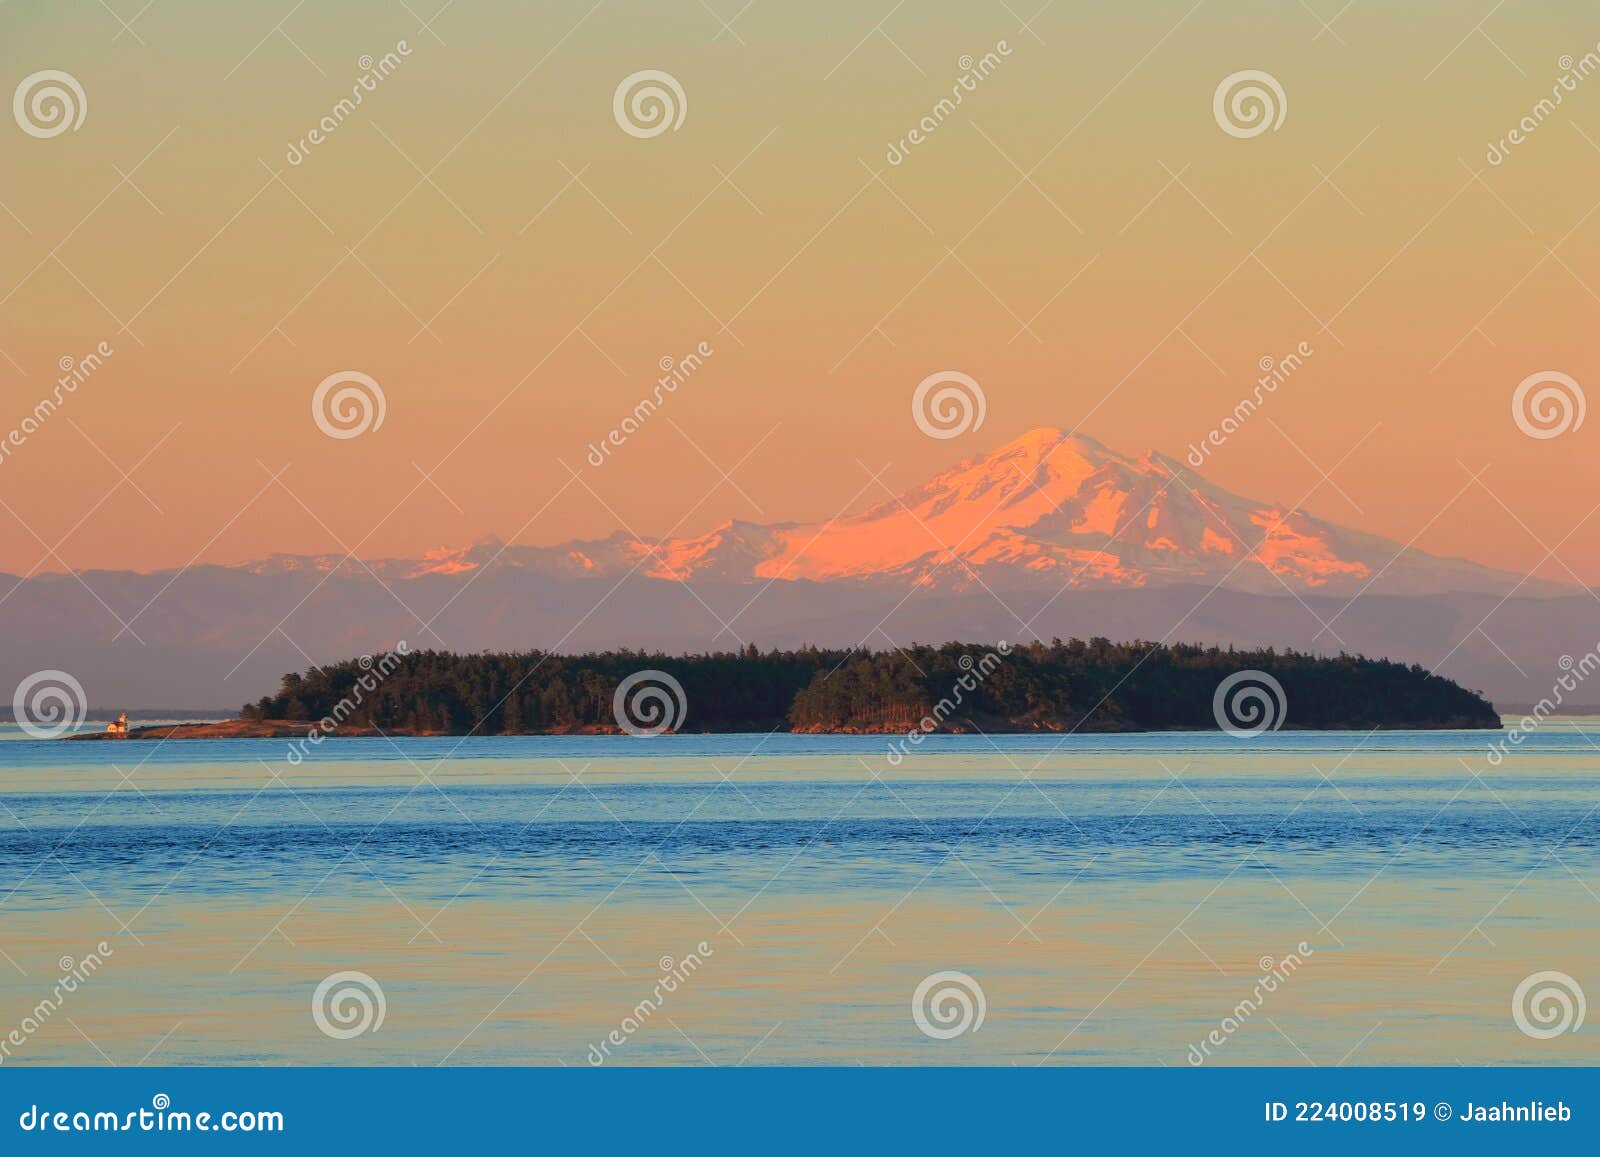 mount baker and patos island at sunset, san juan islands and cascades range washington state, pacific northwest, usa